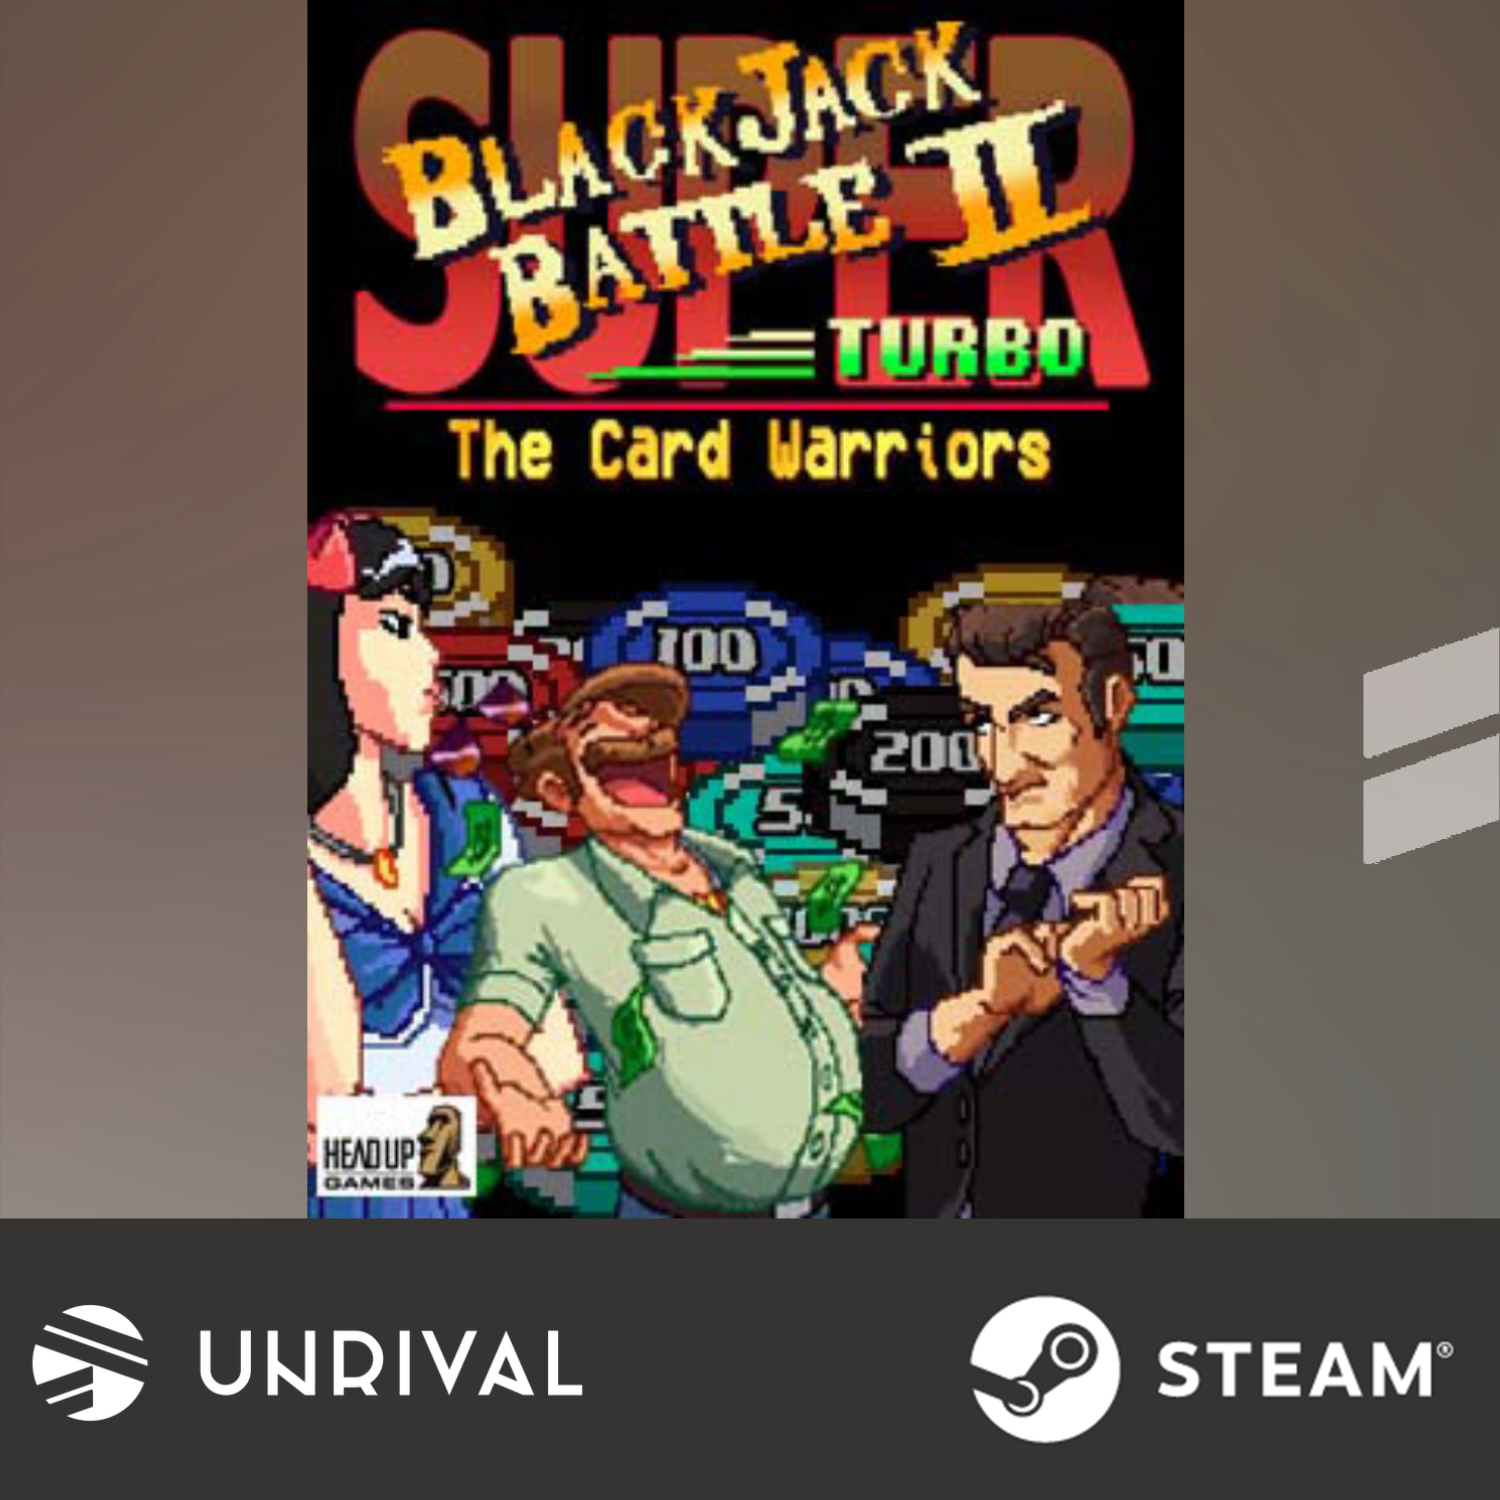 [Hot Sale] Super Blackjack Battle 2 Turbo Edition - The Card Warriors PC Digital Download Game (Multiplayer) - Unrival